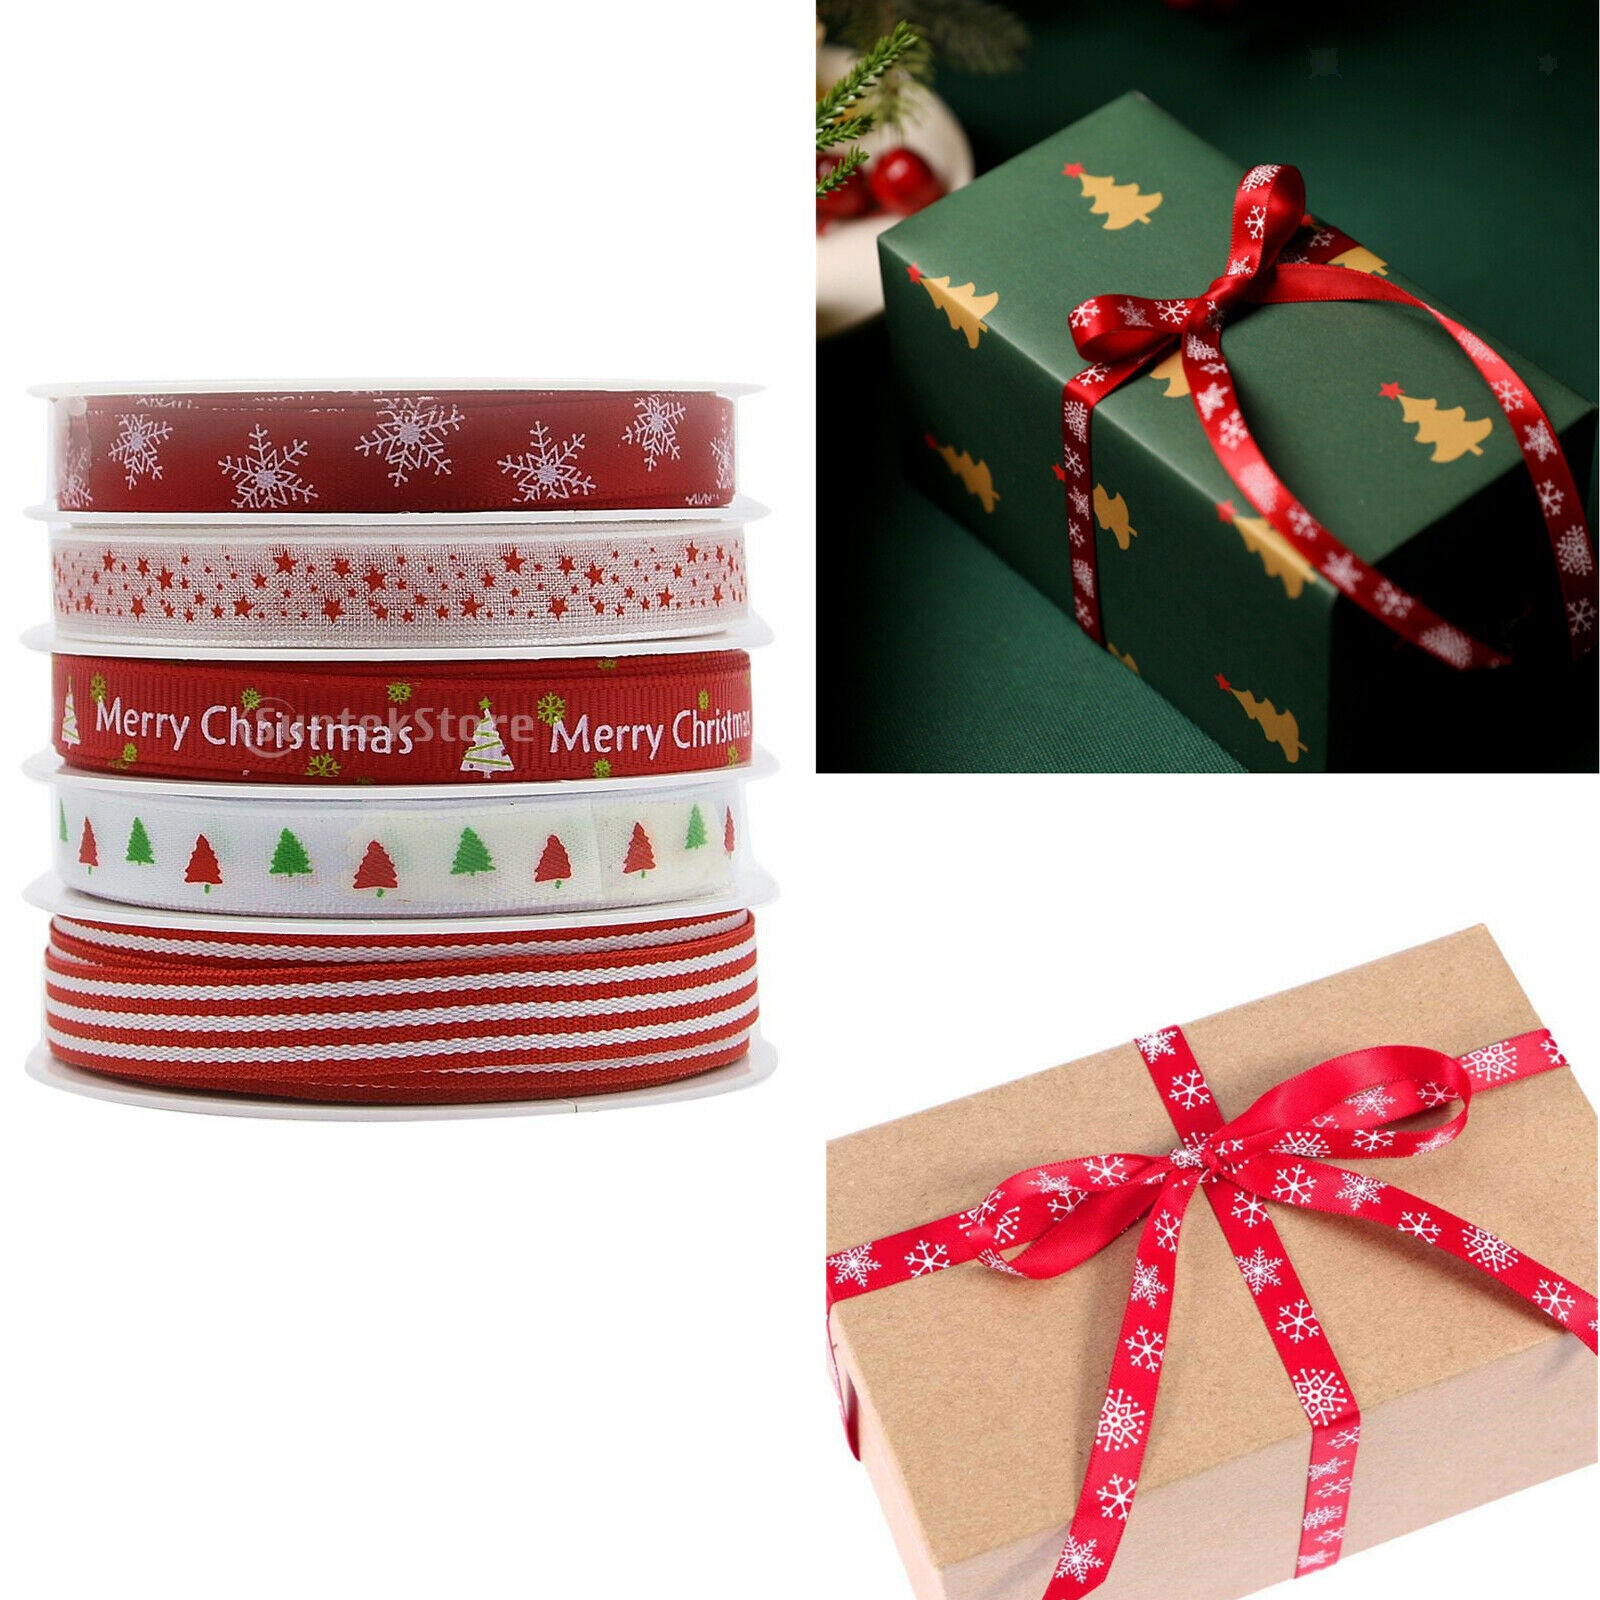 5 Styles 25m 3/8 "Grosgrain Satin Fabric Ribbon for Christmas, Holidays, Winter